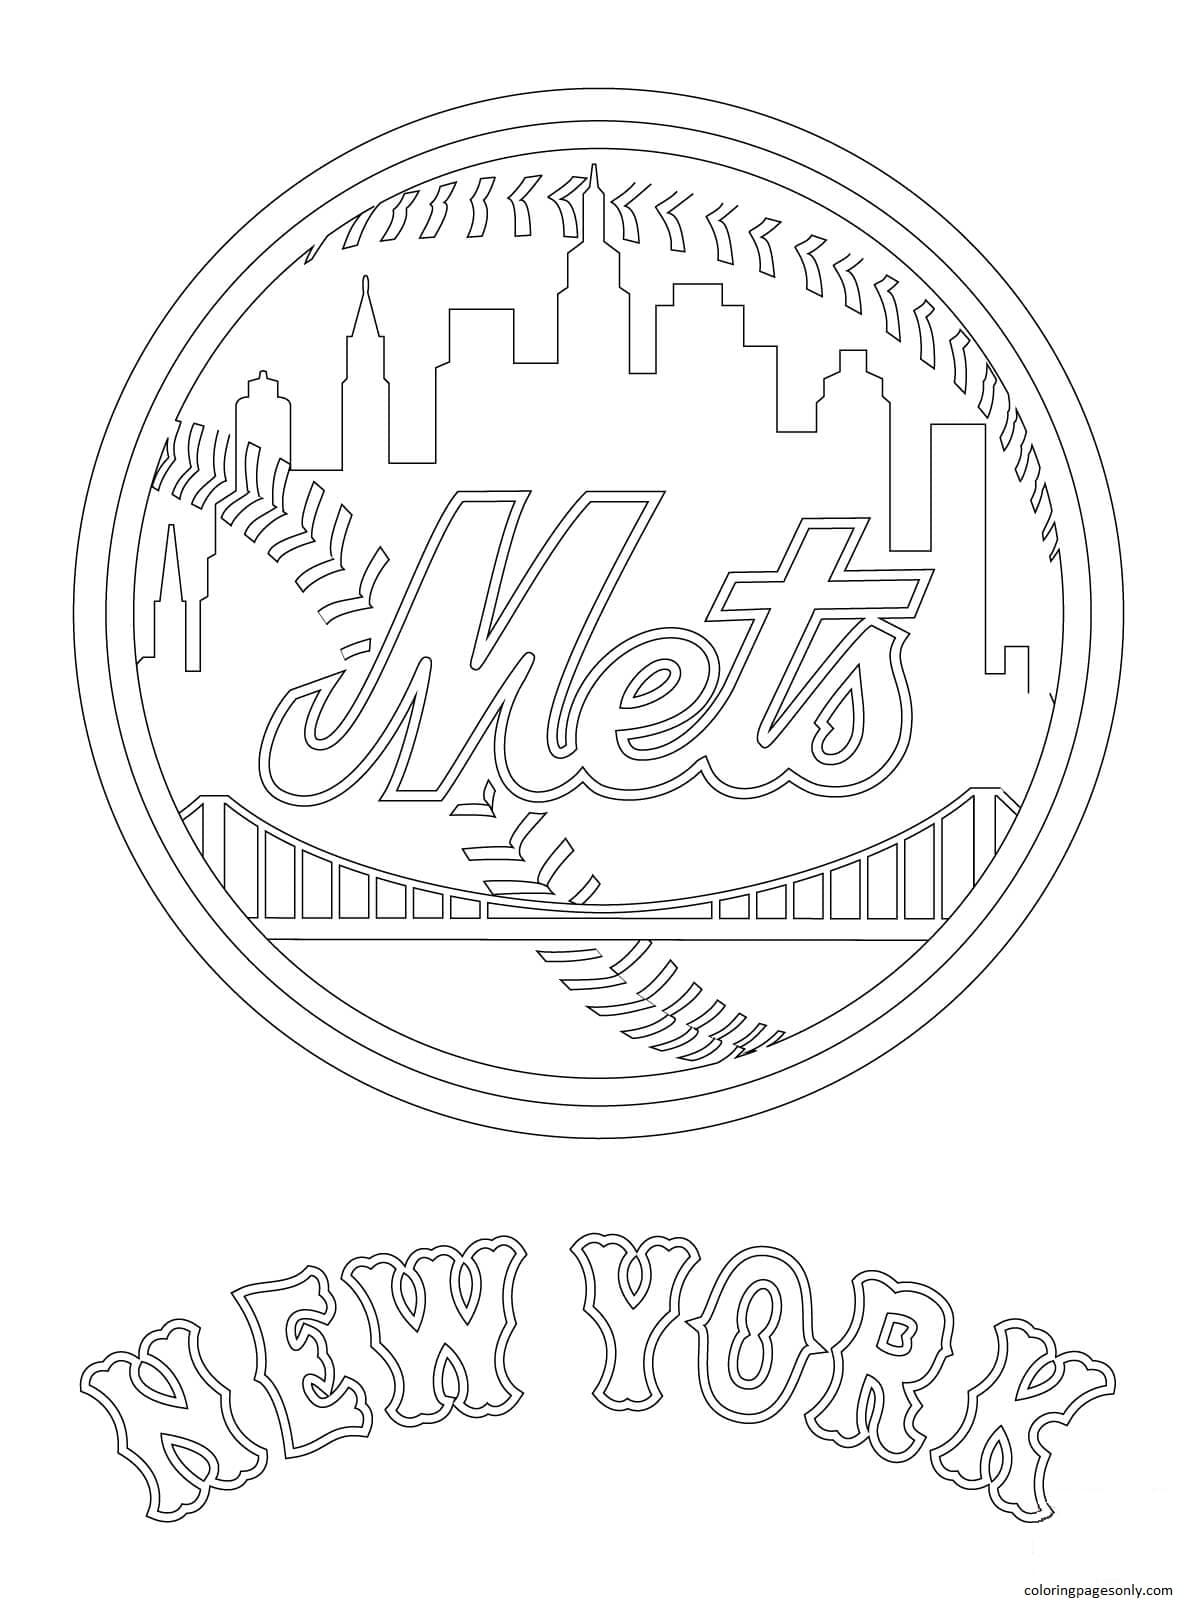 Página para colorir do logotipo do New York Mets